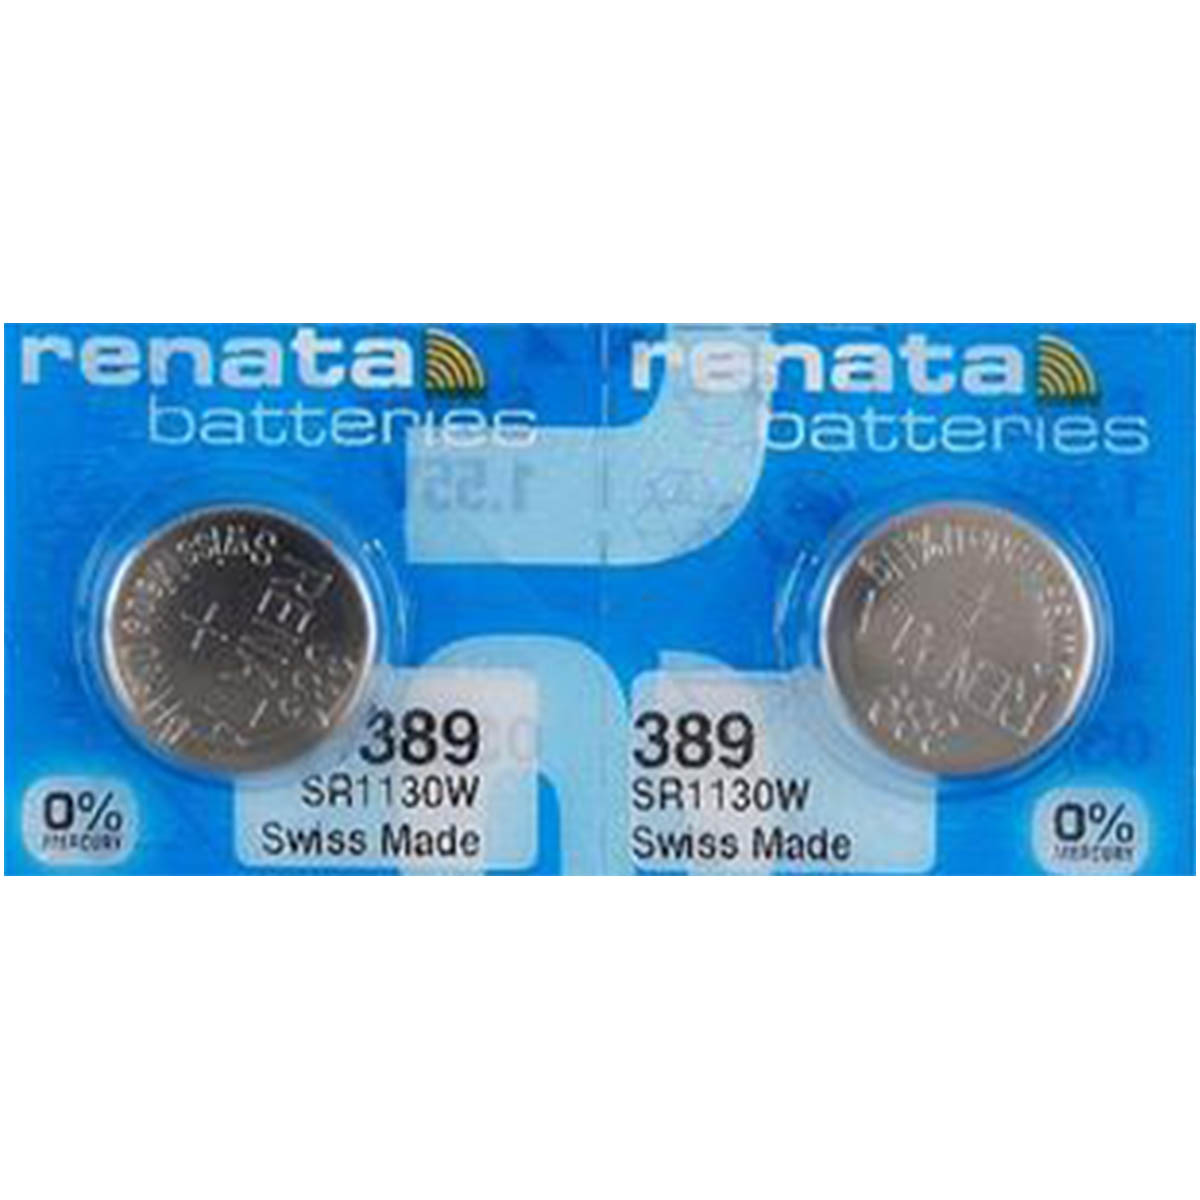 Renata 389 Battery (SR1130W) Silver Oxide 1.55V (1PC)